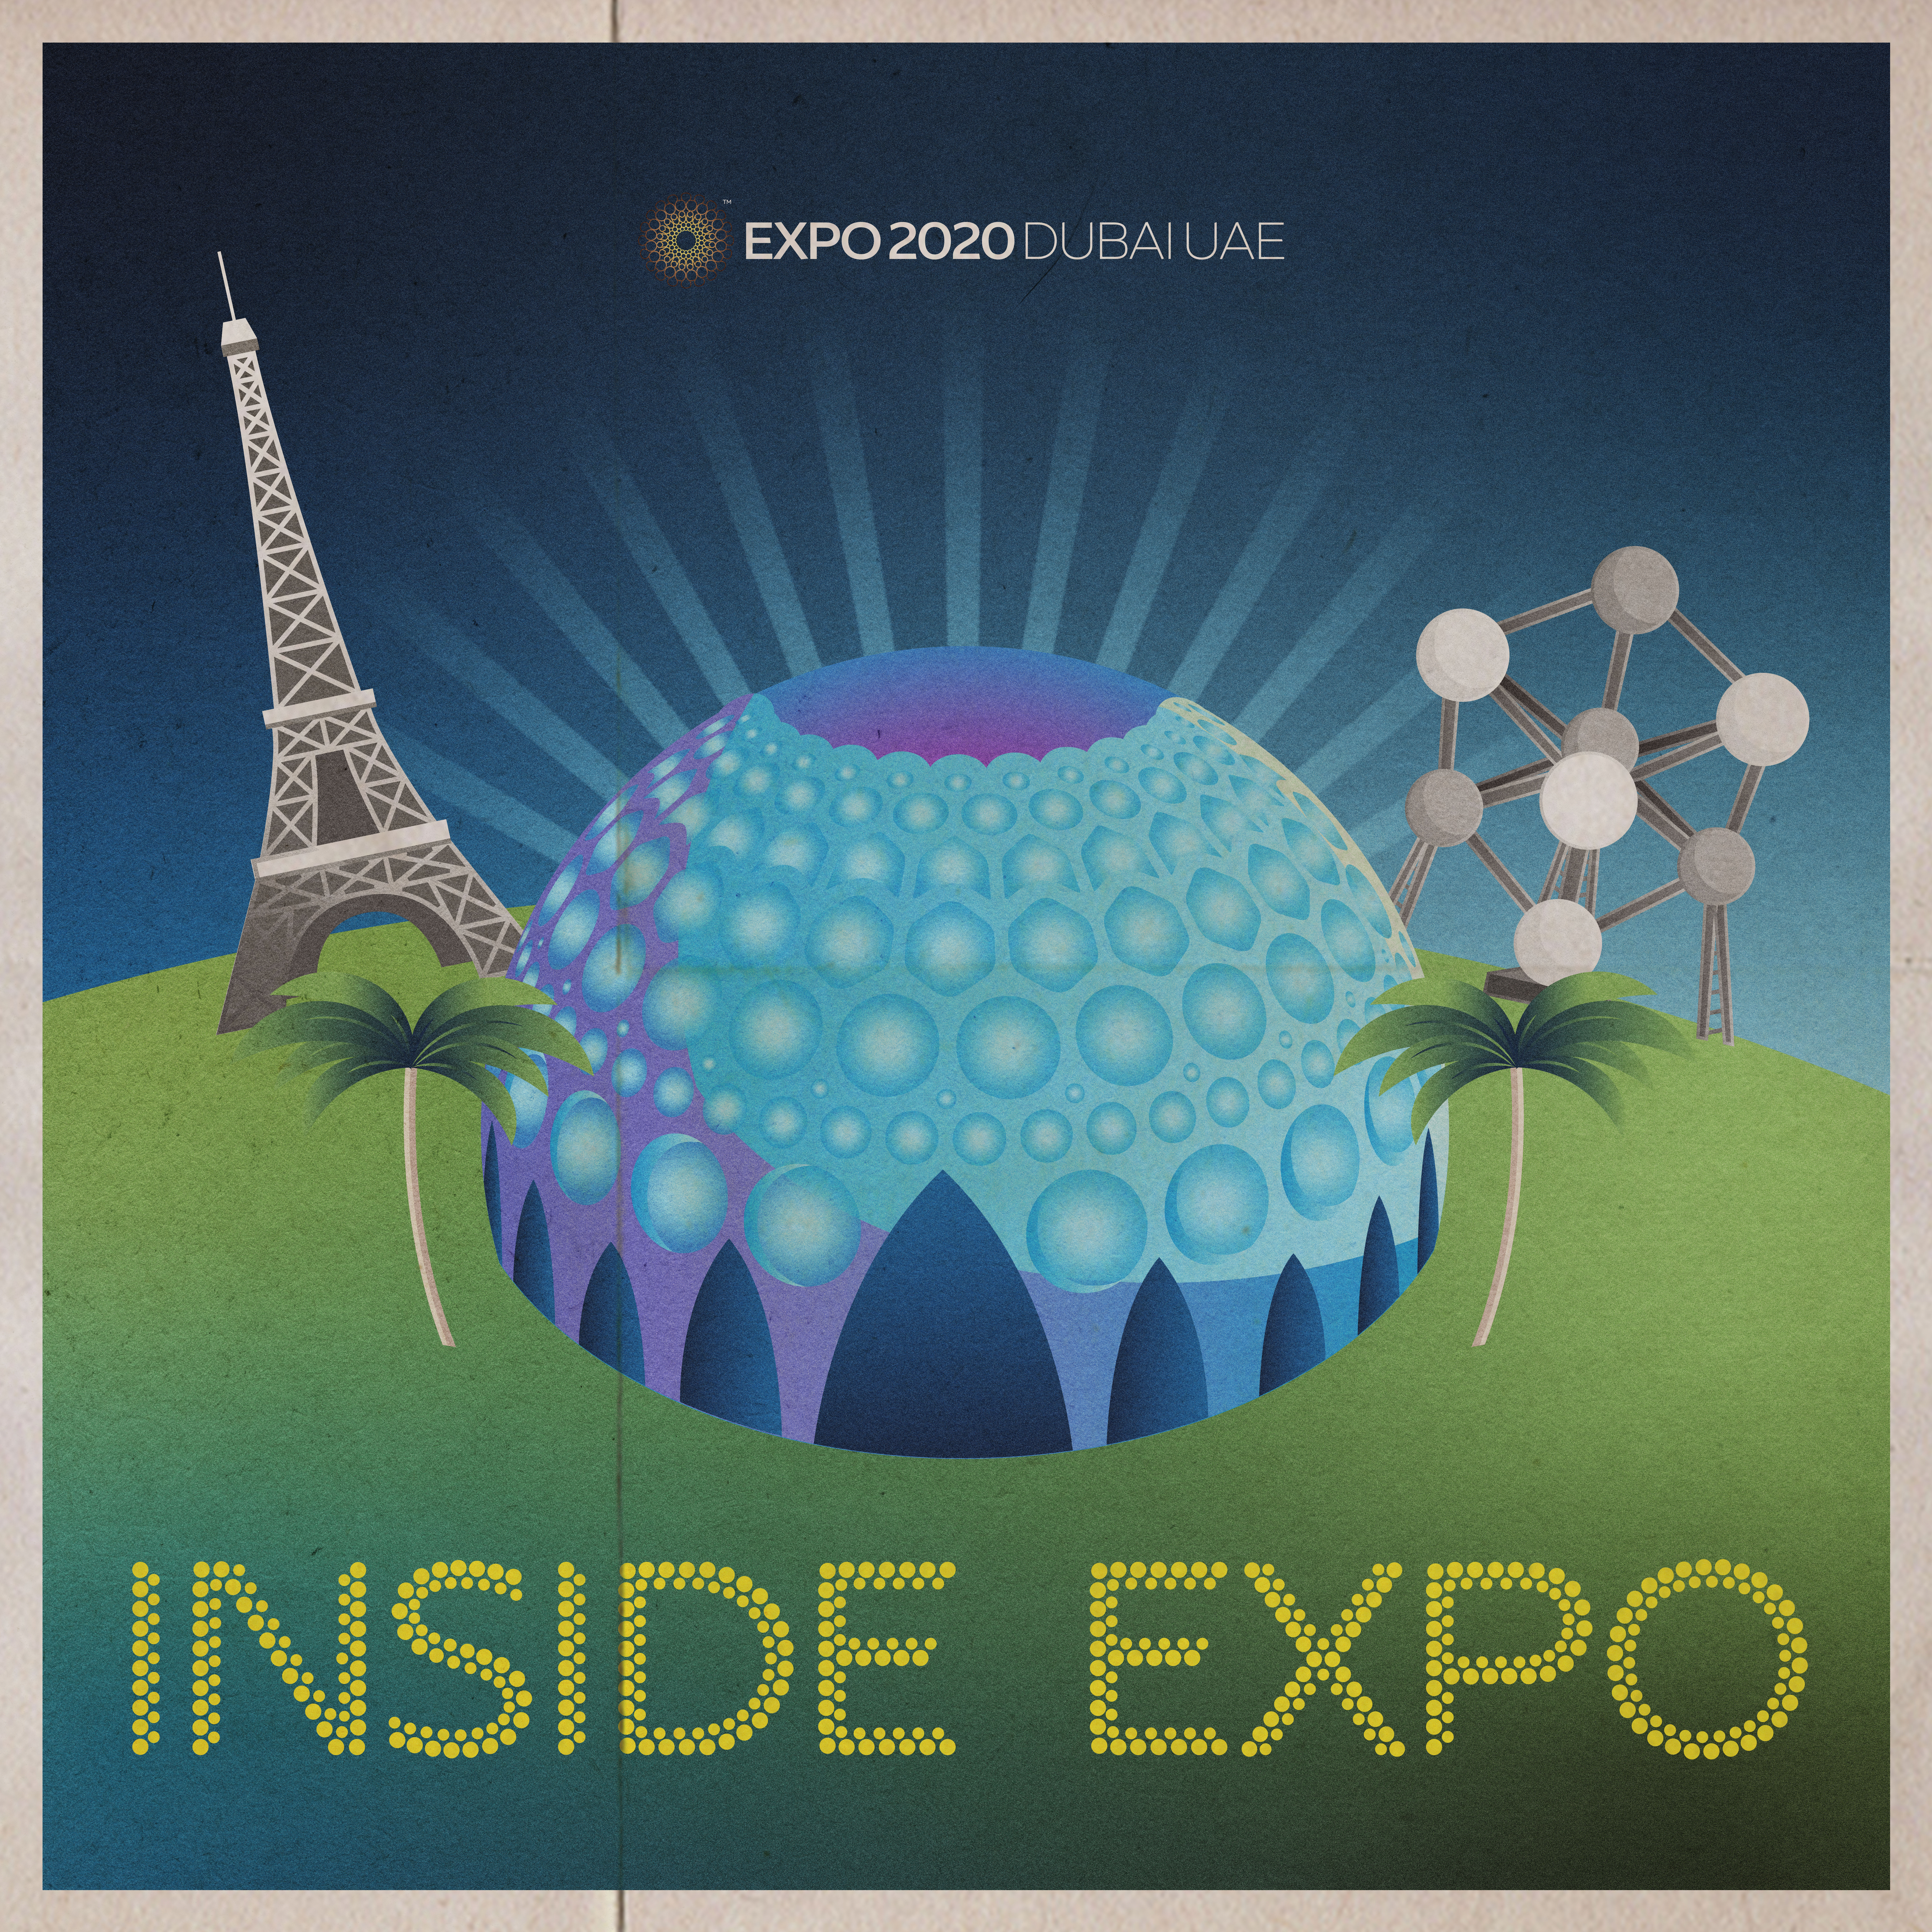 Inside Expo logo